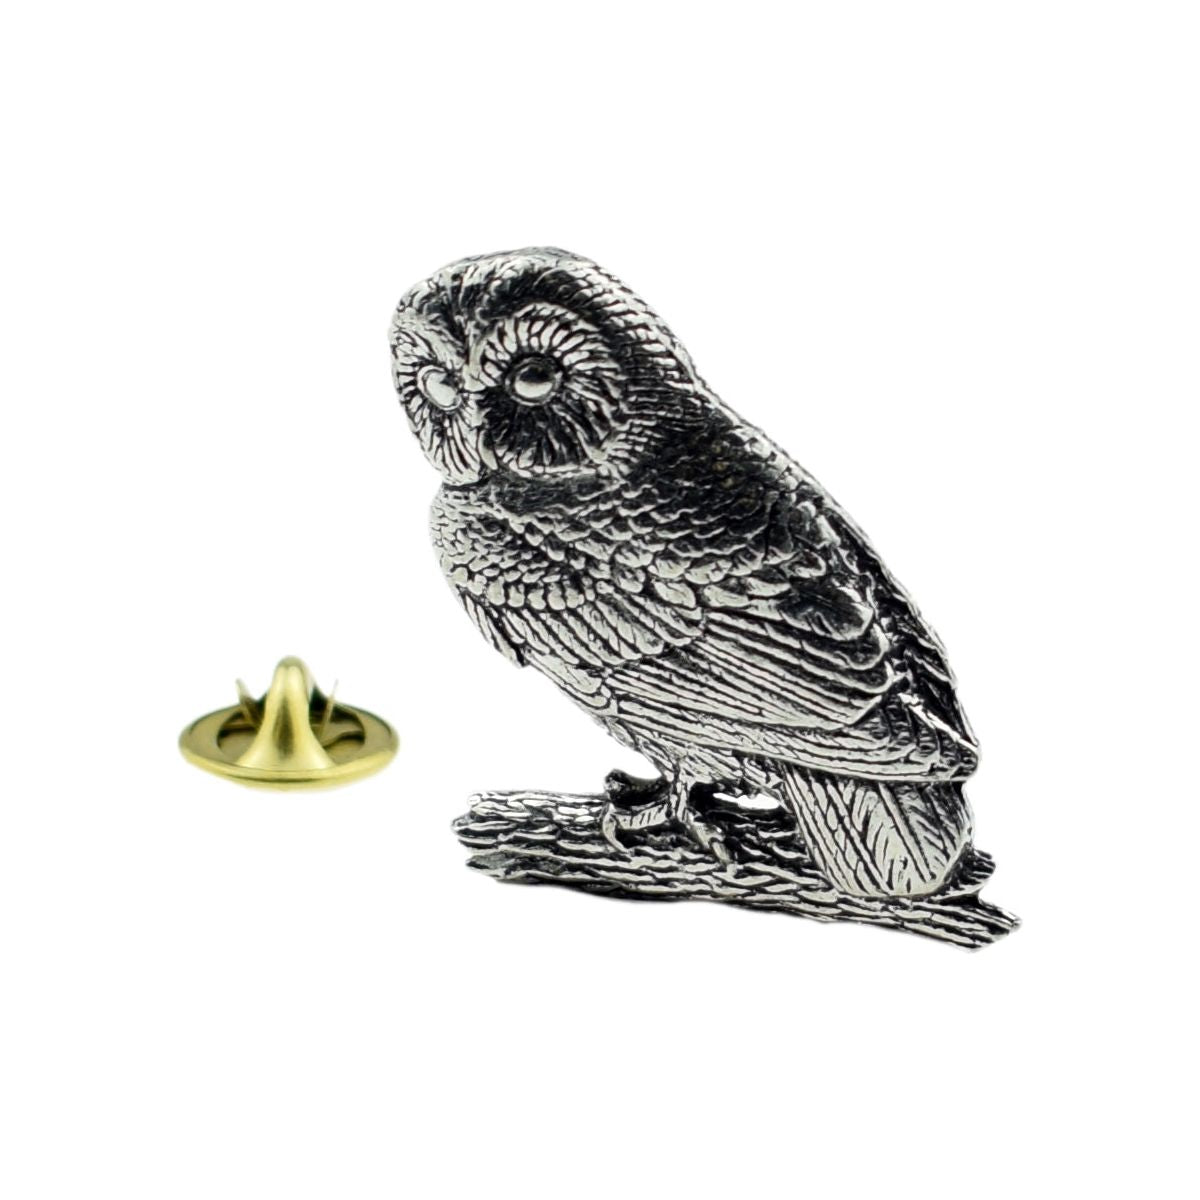 Tawny Owl Bird English Pewter Lapel Pin Badge - Ashton and Finch